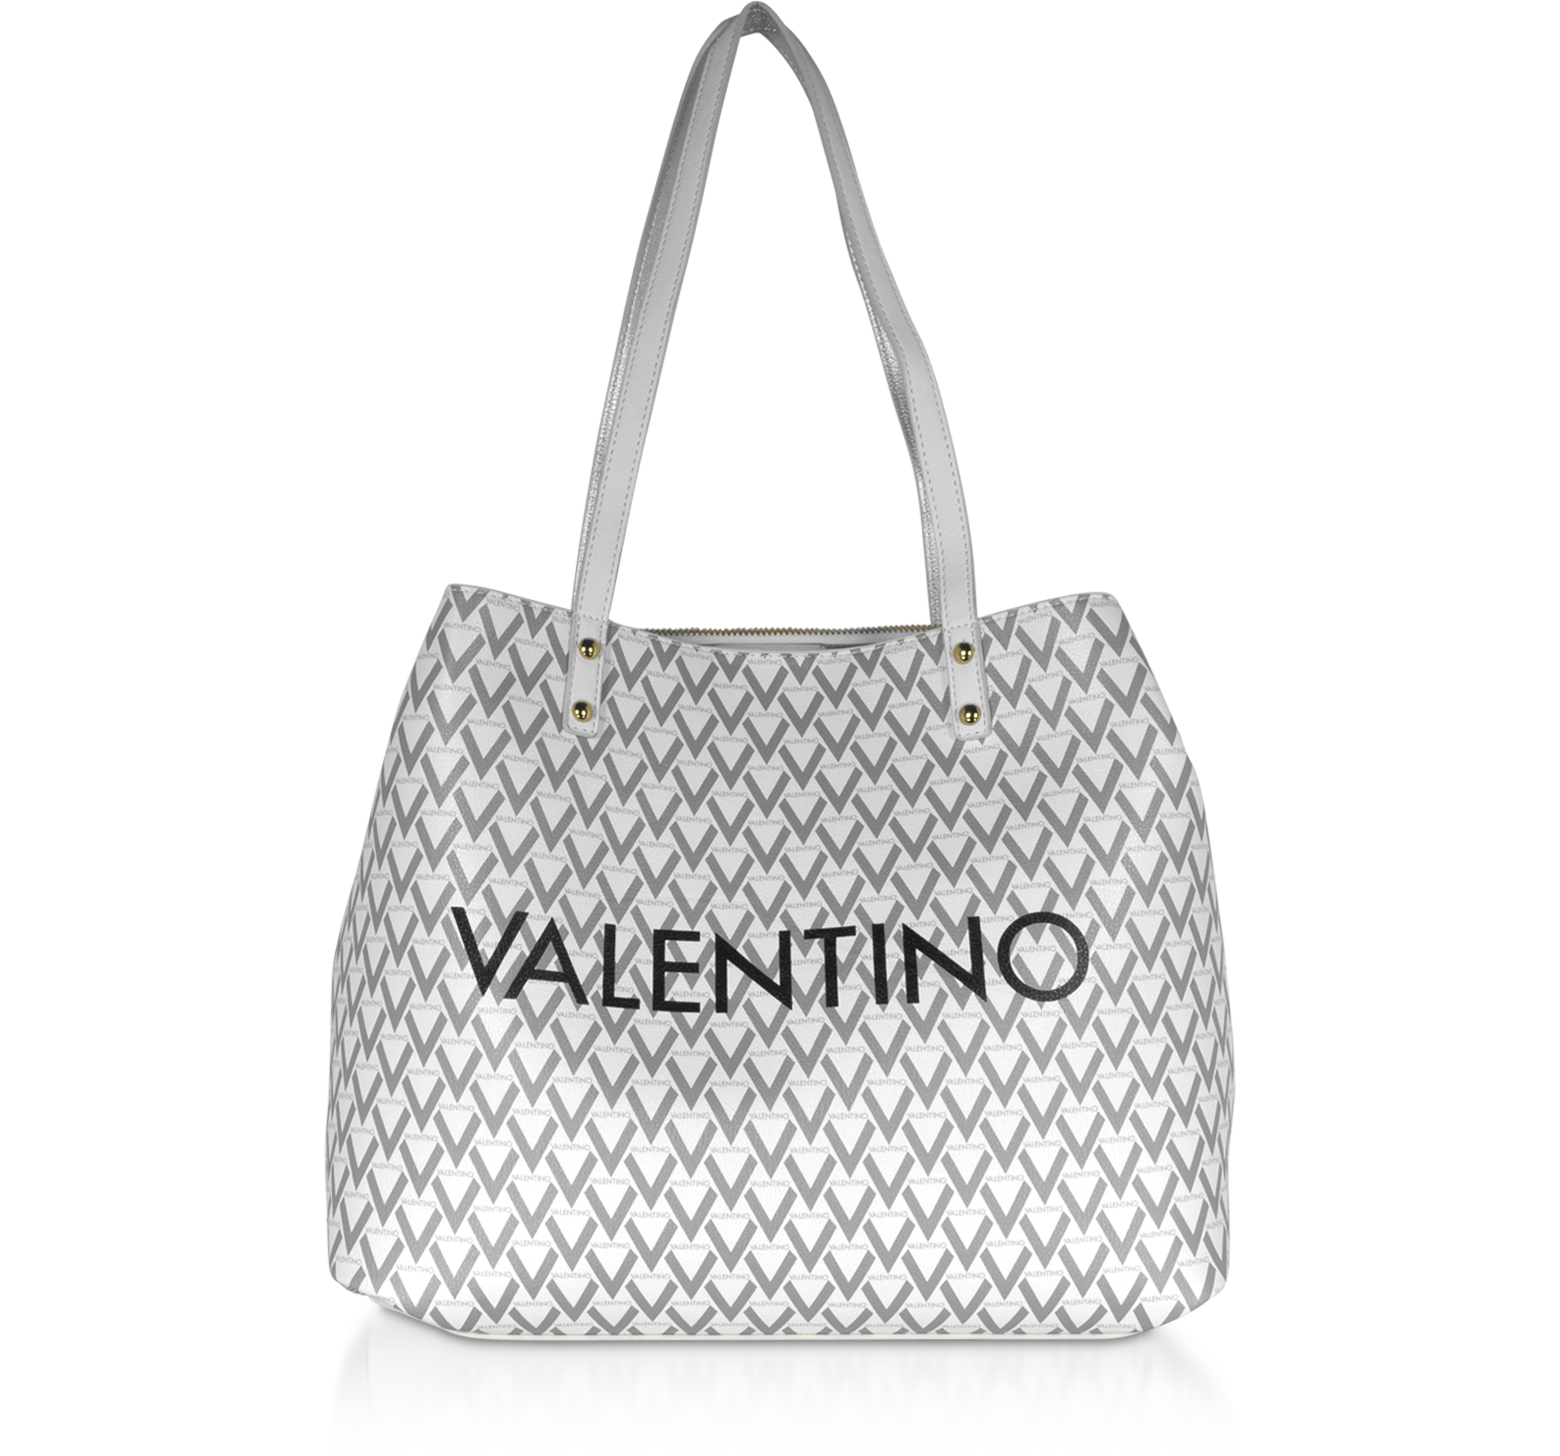 Valentino Bags by Mario Valentino Copia - Kerbelco